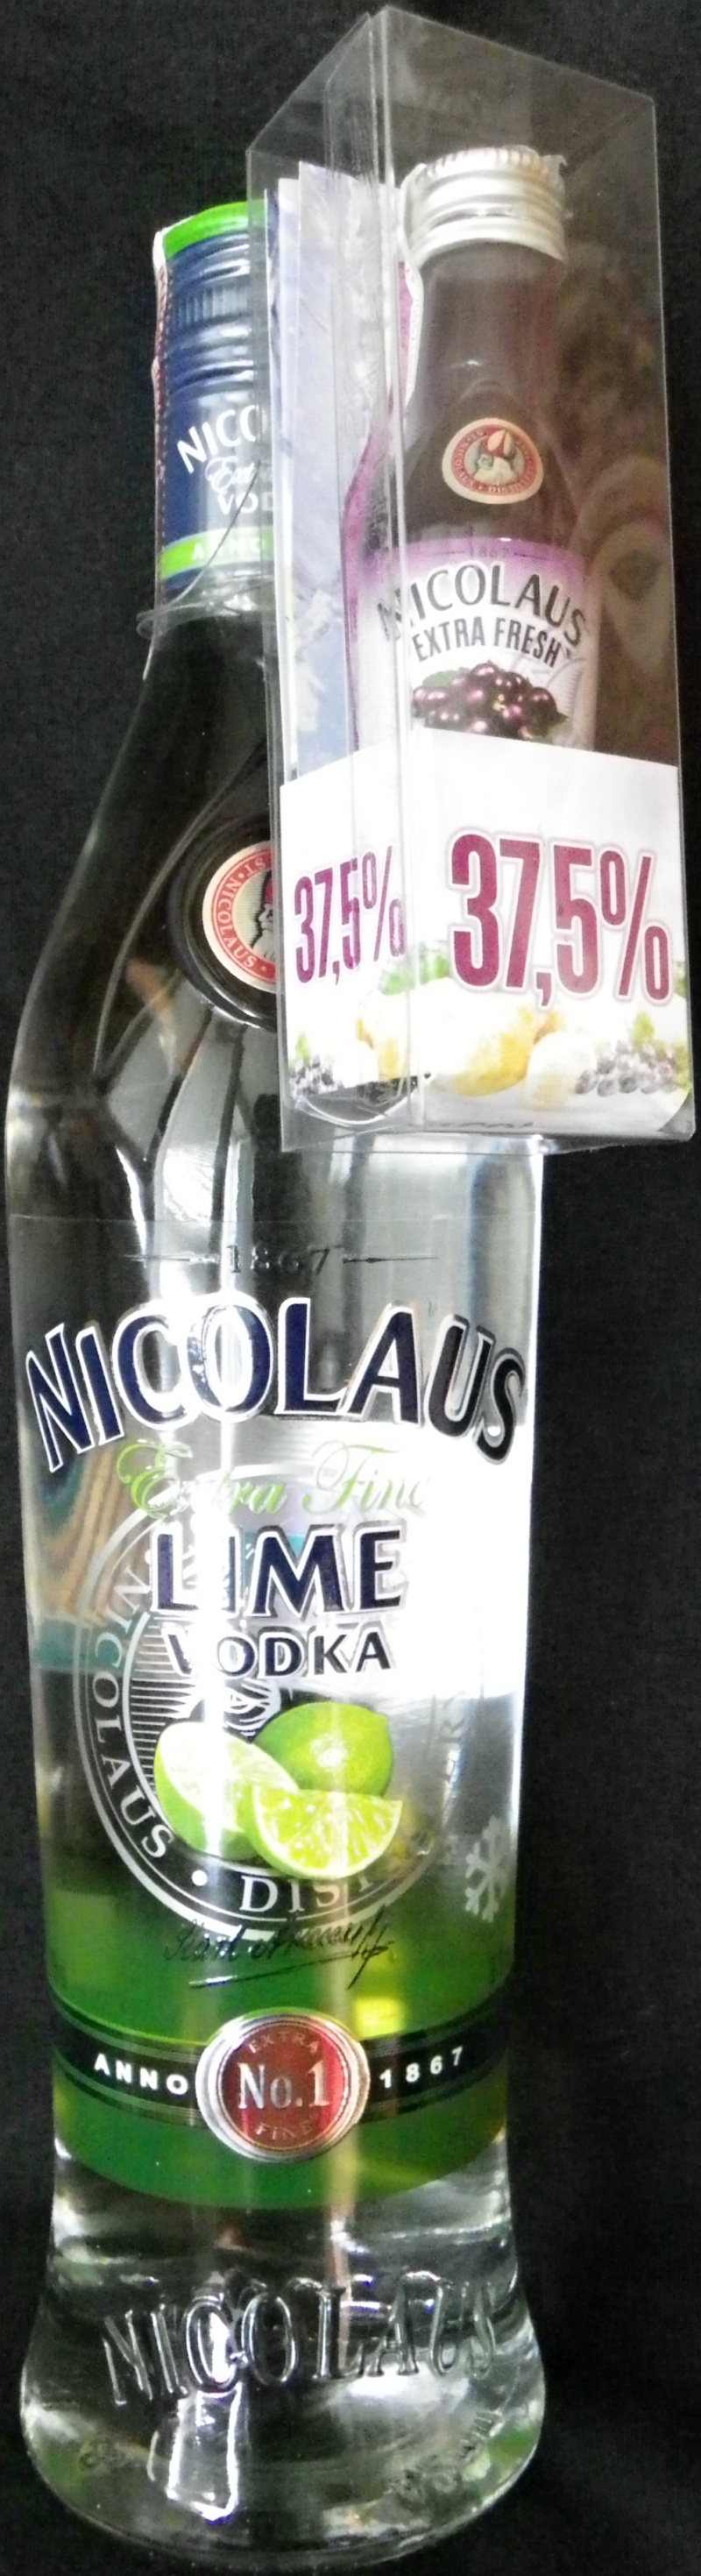 Nicolaus
Extra Fine - Lime vodka
Extra Fresh - Vodka ríbezovka